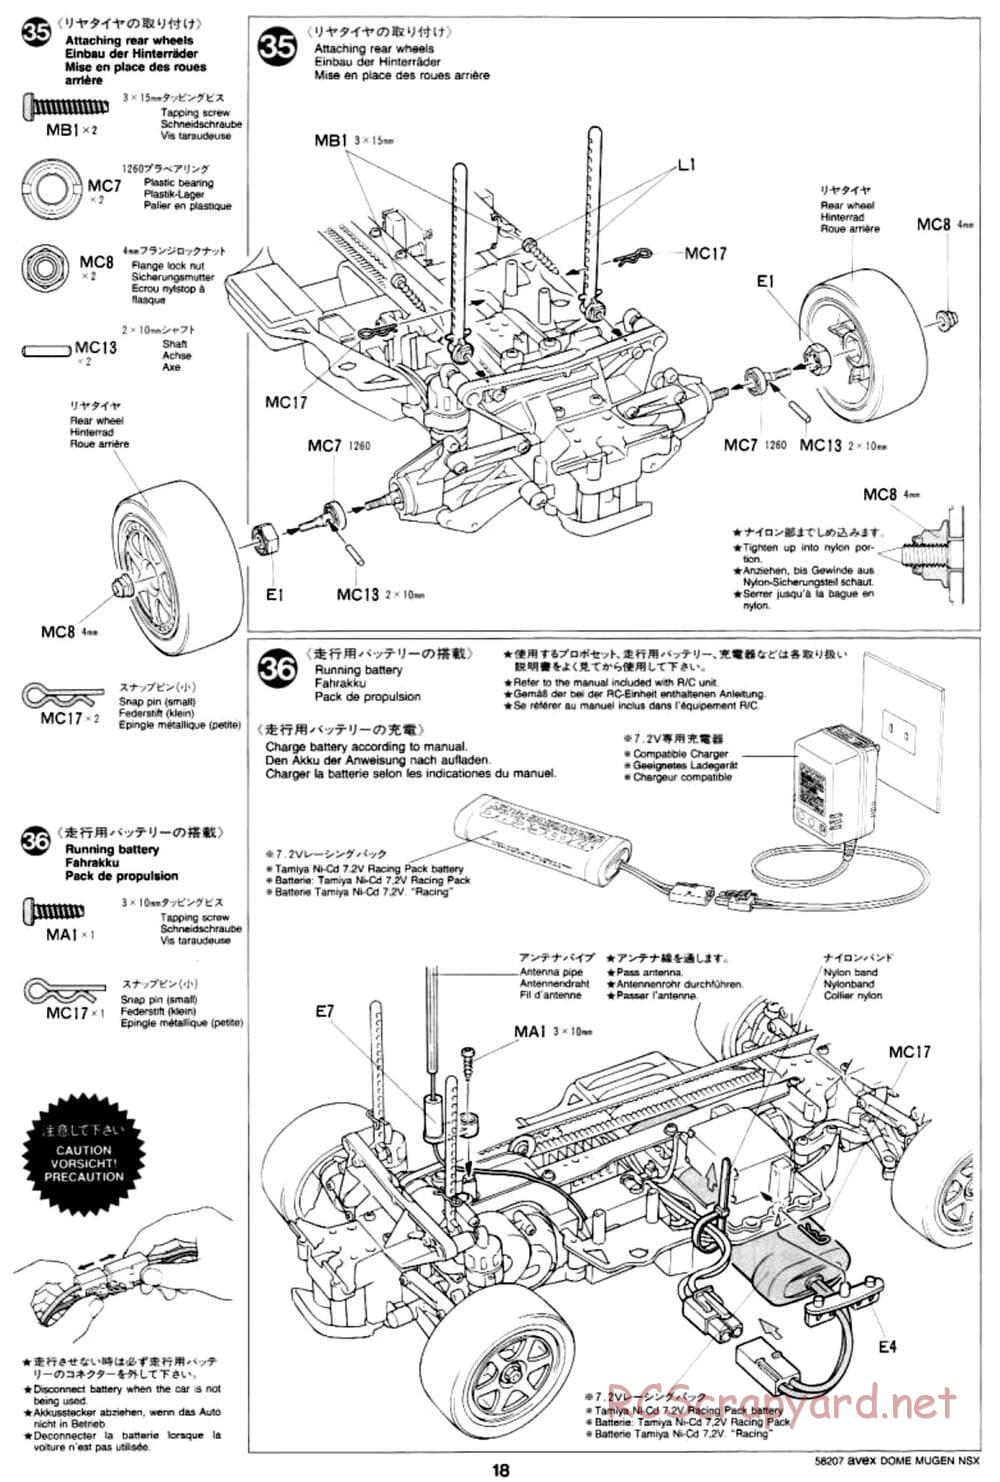 Tamiya - Avex Dome Mugen NSX - TA-03R Chassis - Manual - Page 18